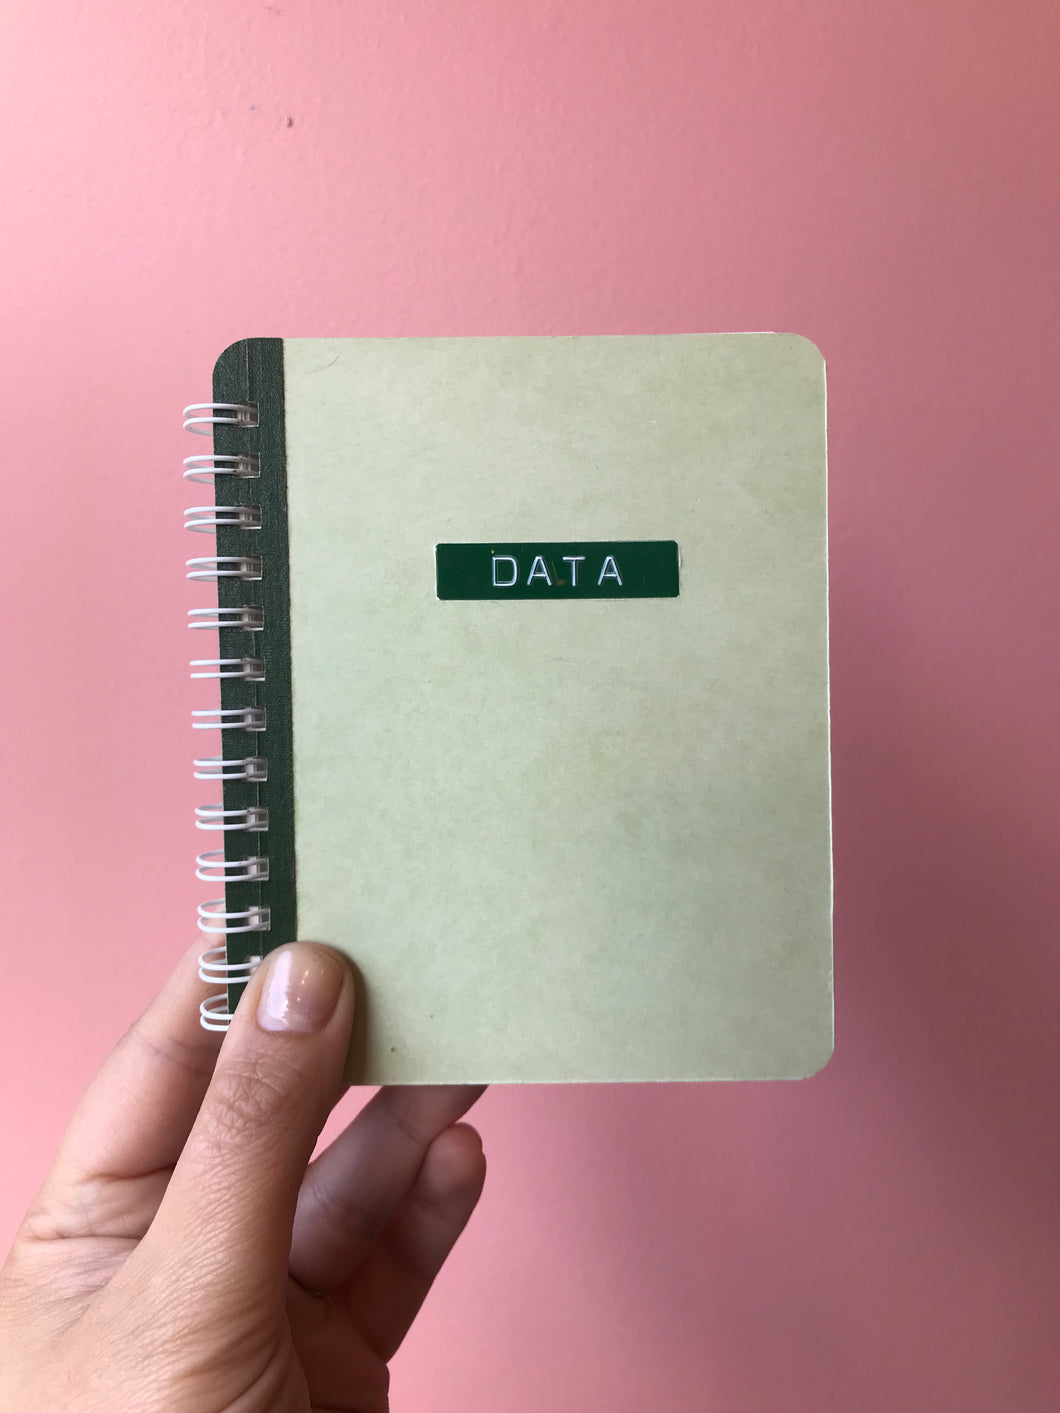 DATA - handmade rescued notebook